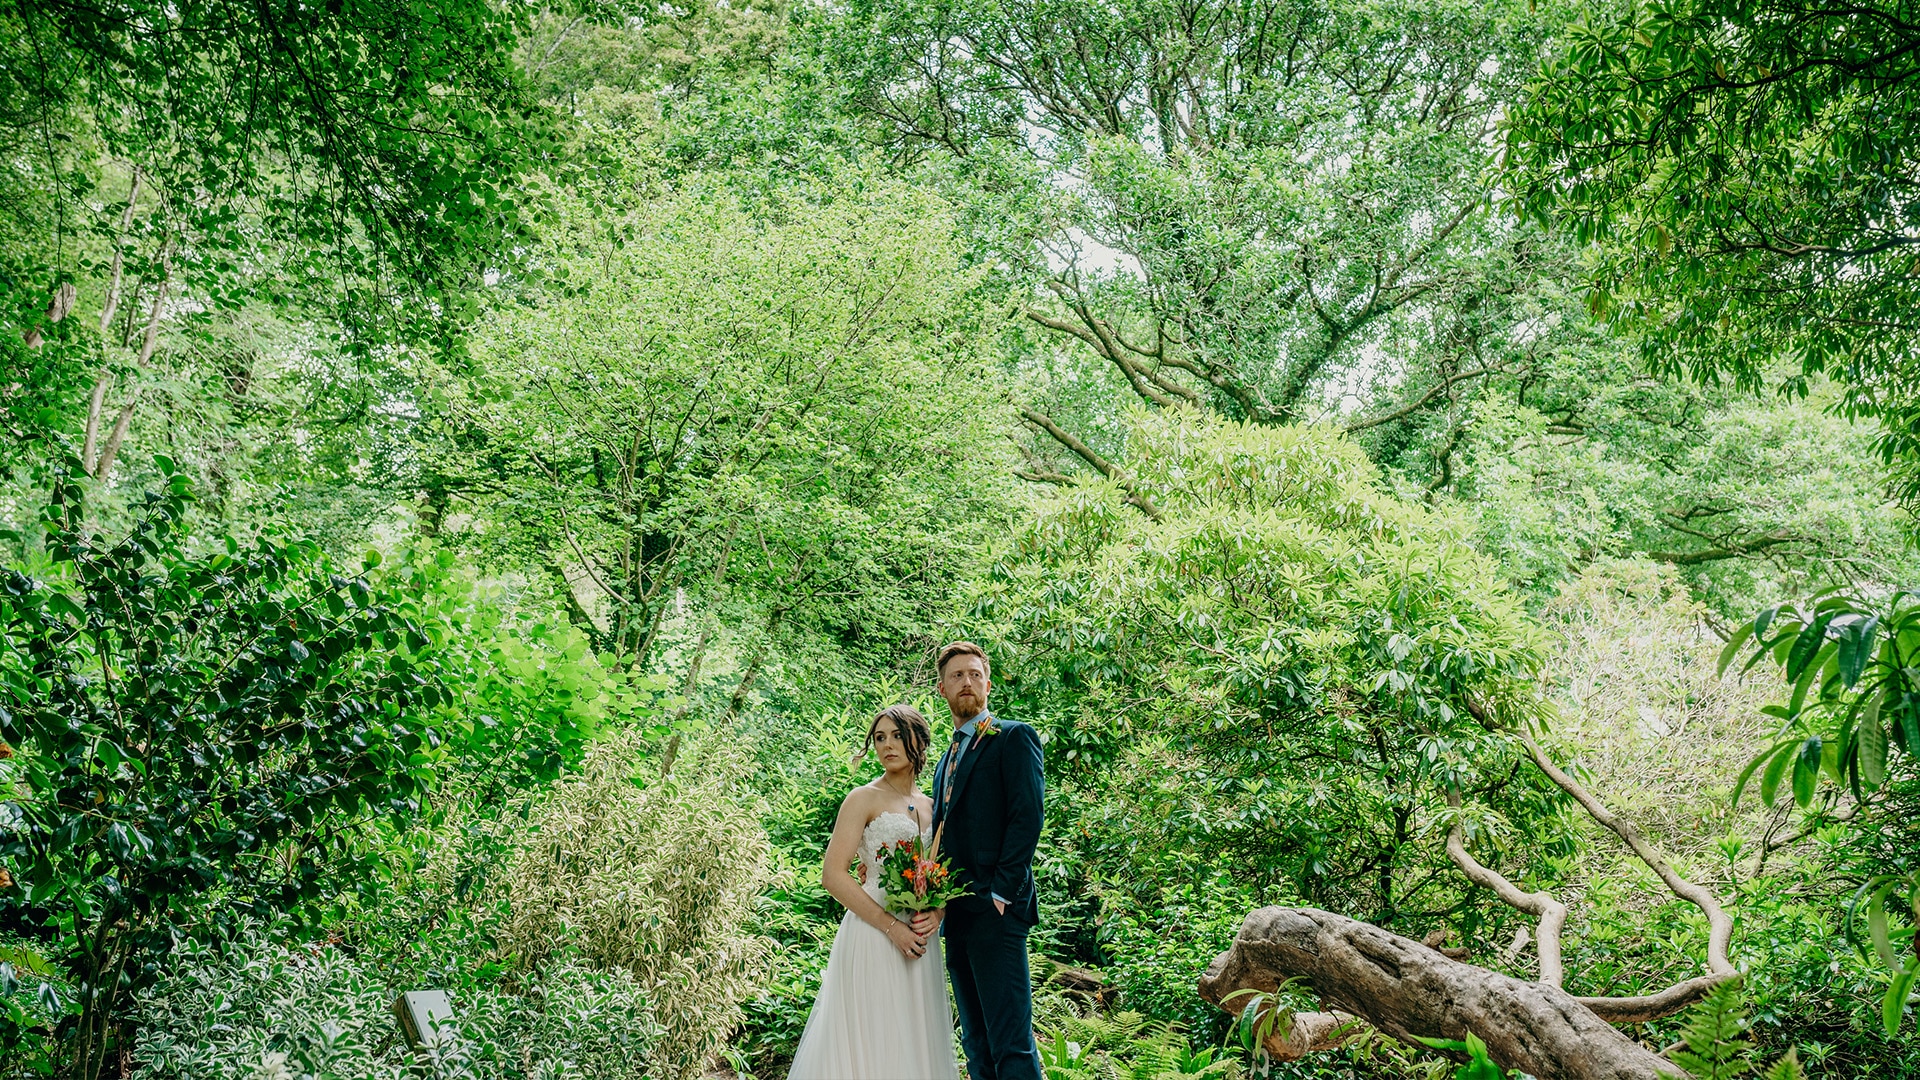 A Wild Beginning: A Unique Wedding in Devon at Dartmoor Zoo